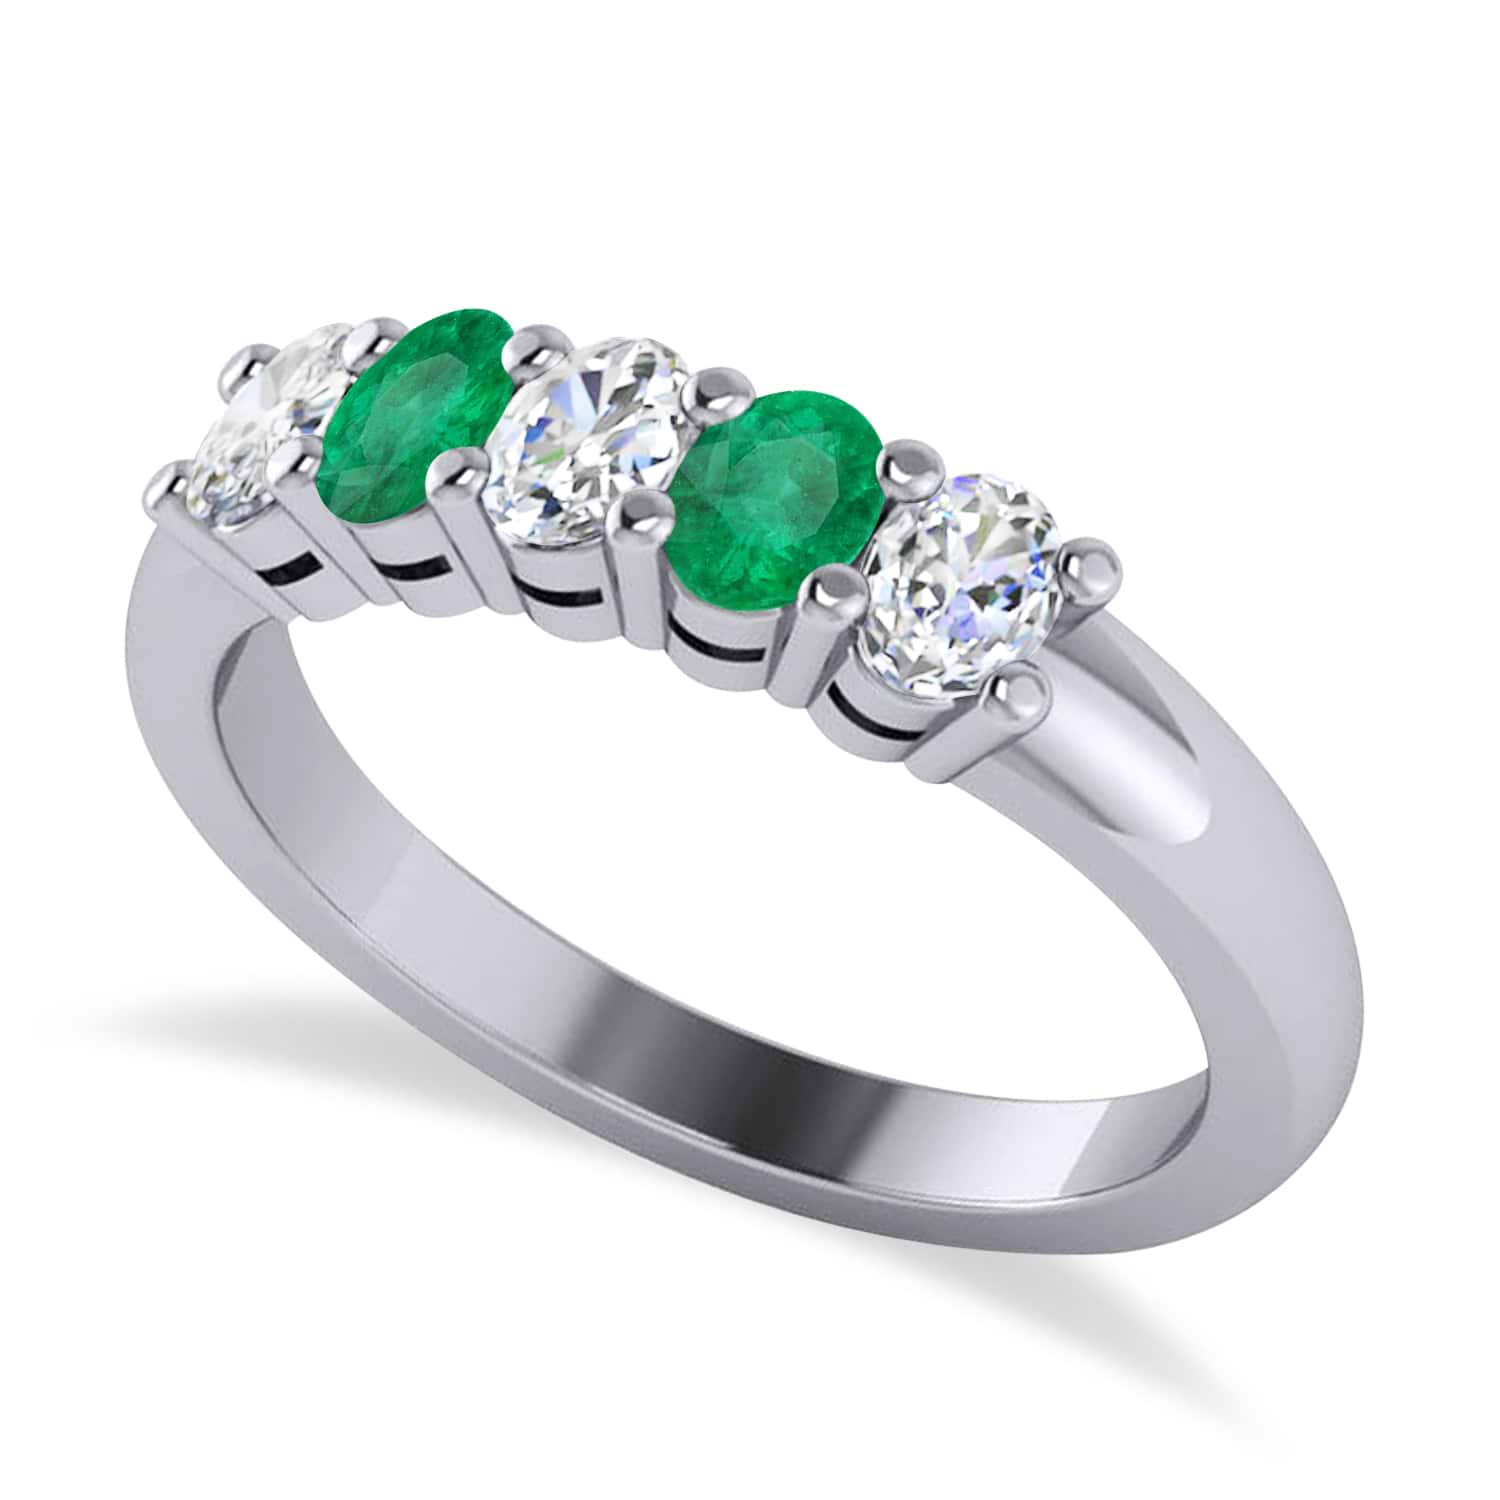 Oval Diamond & Emerald Five Stone Ring 14k White Gold (1.00ct)